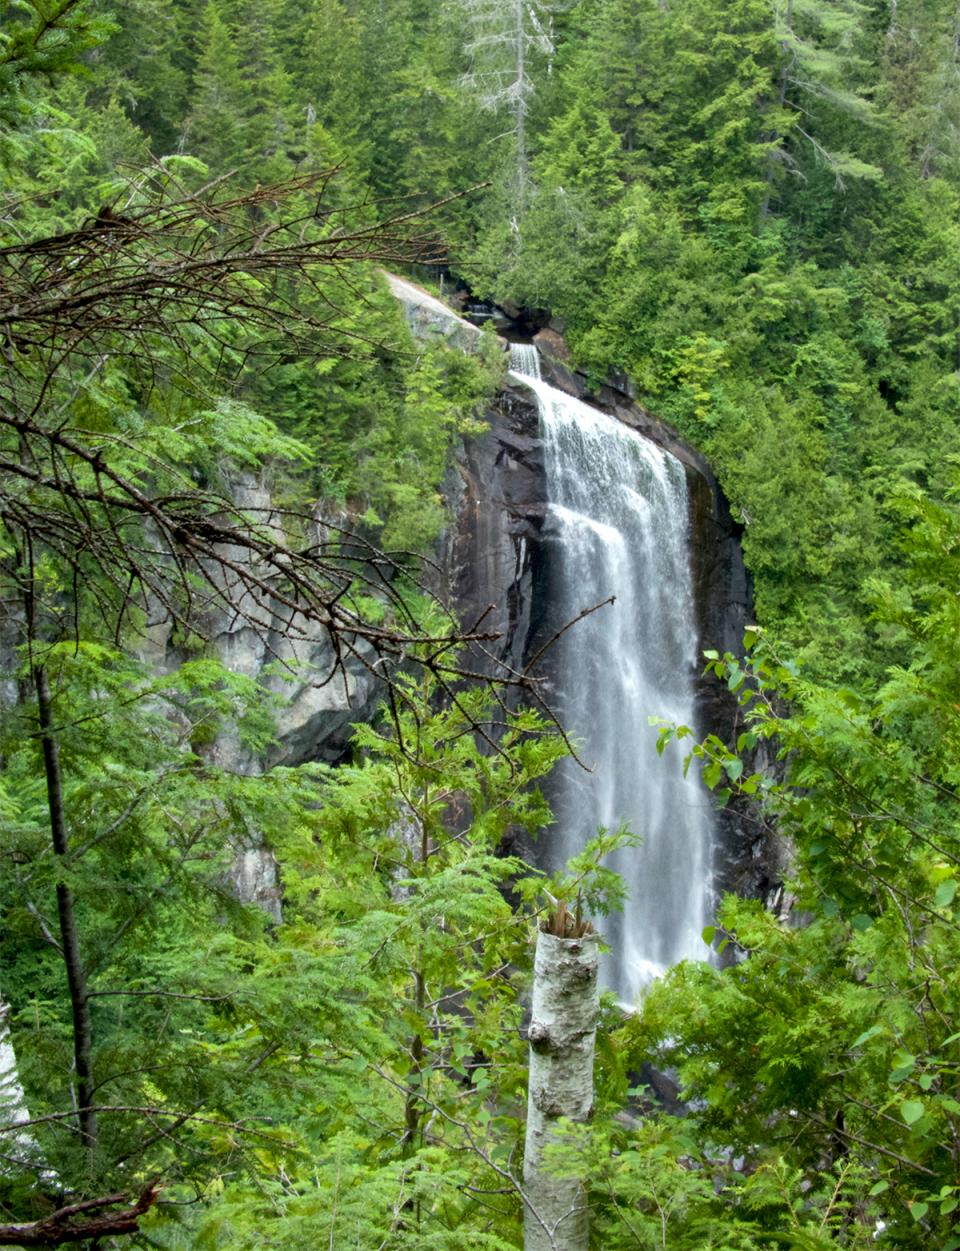 Spectacular view of OK Slip Falls